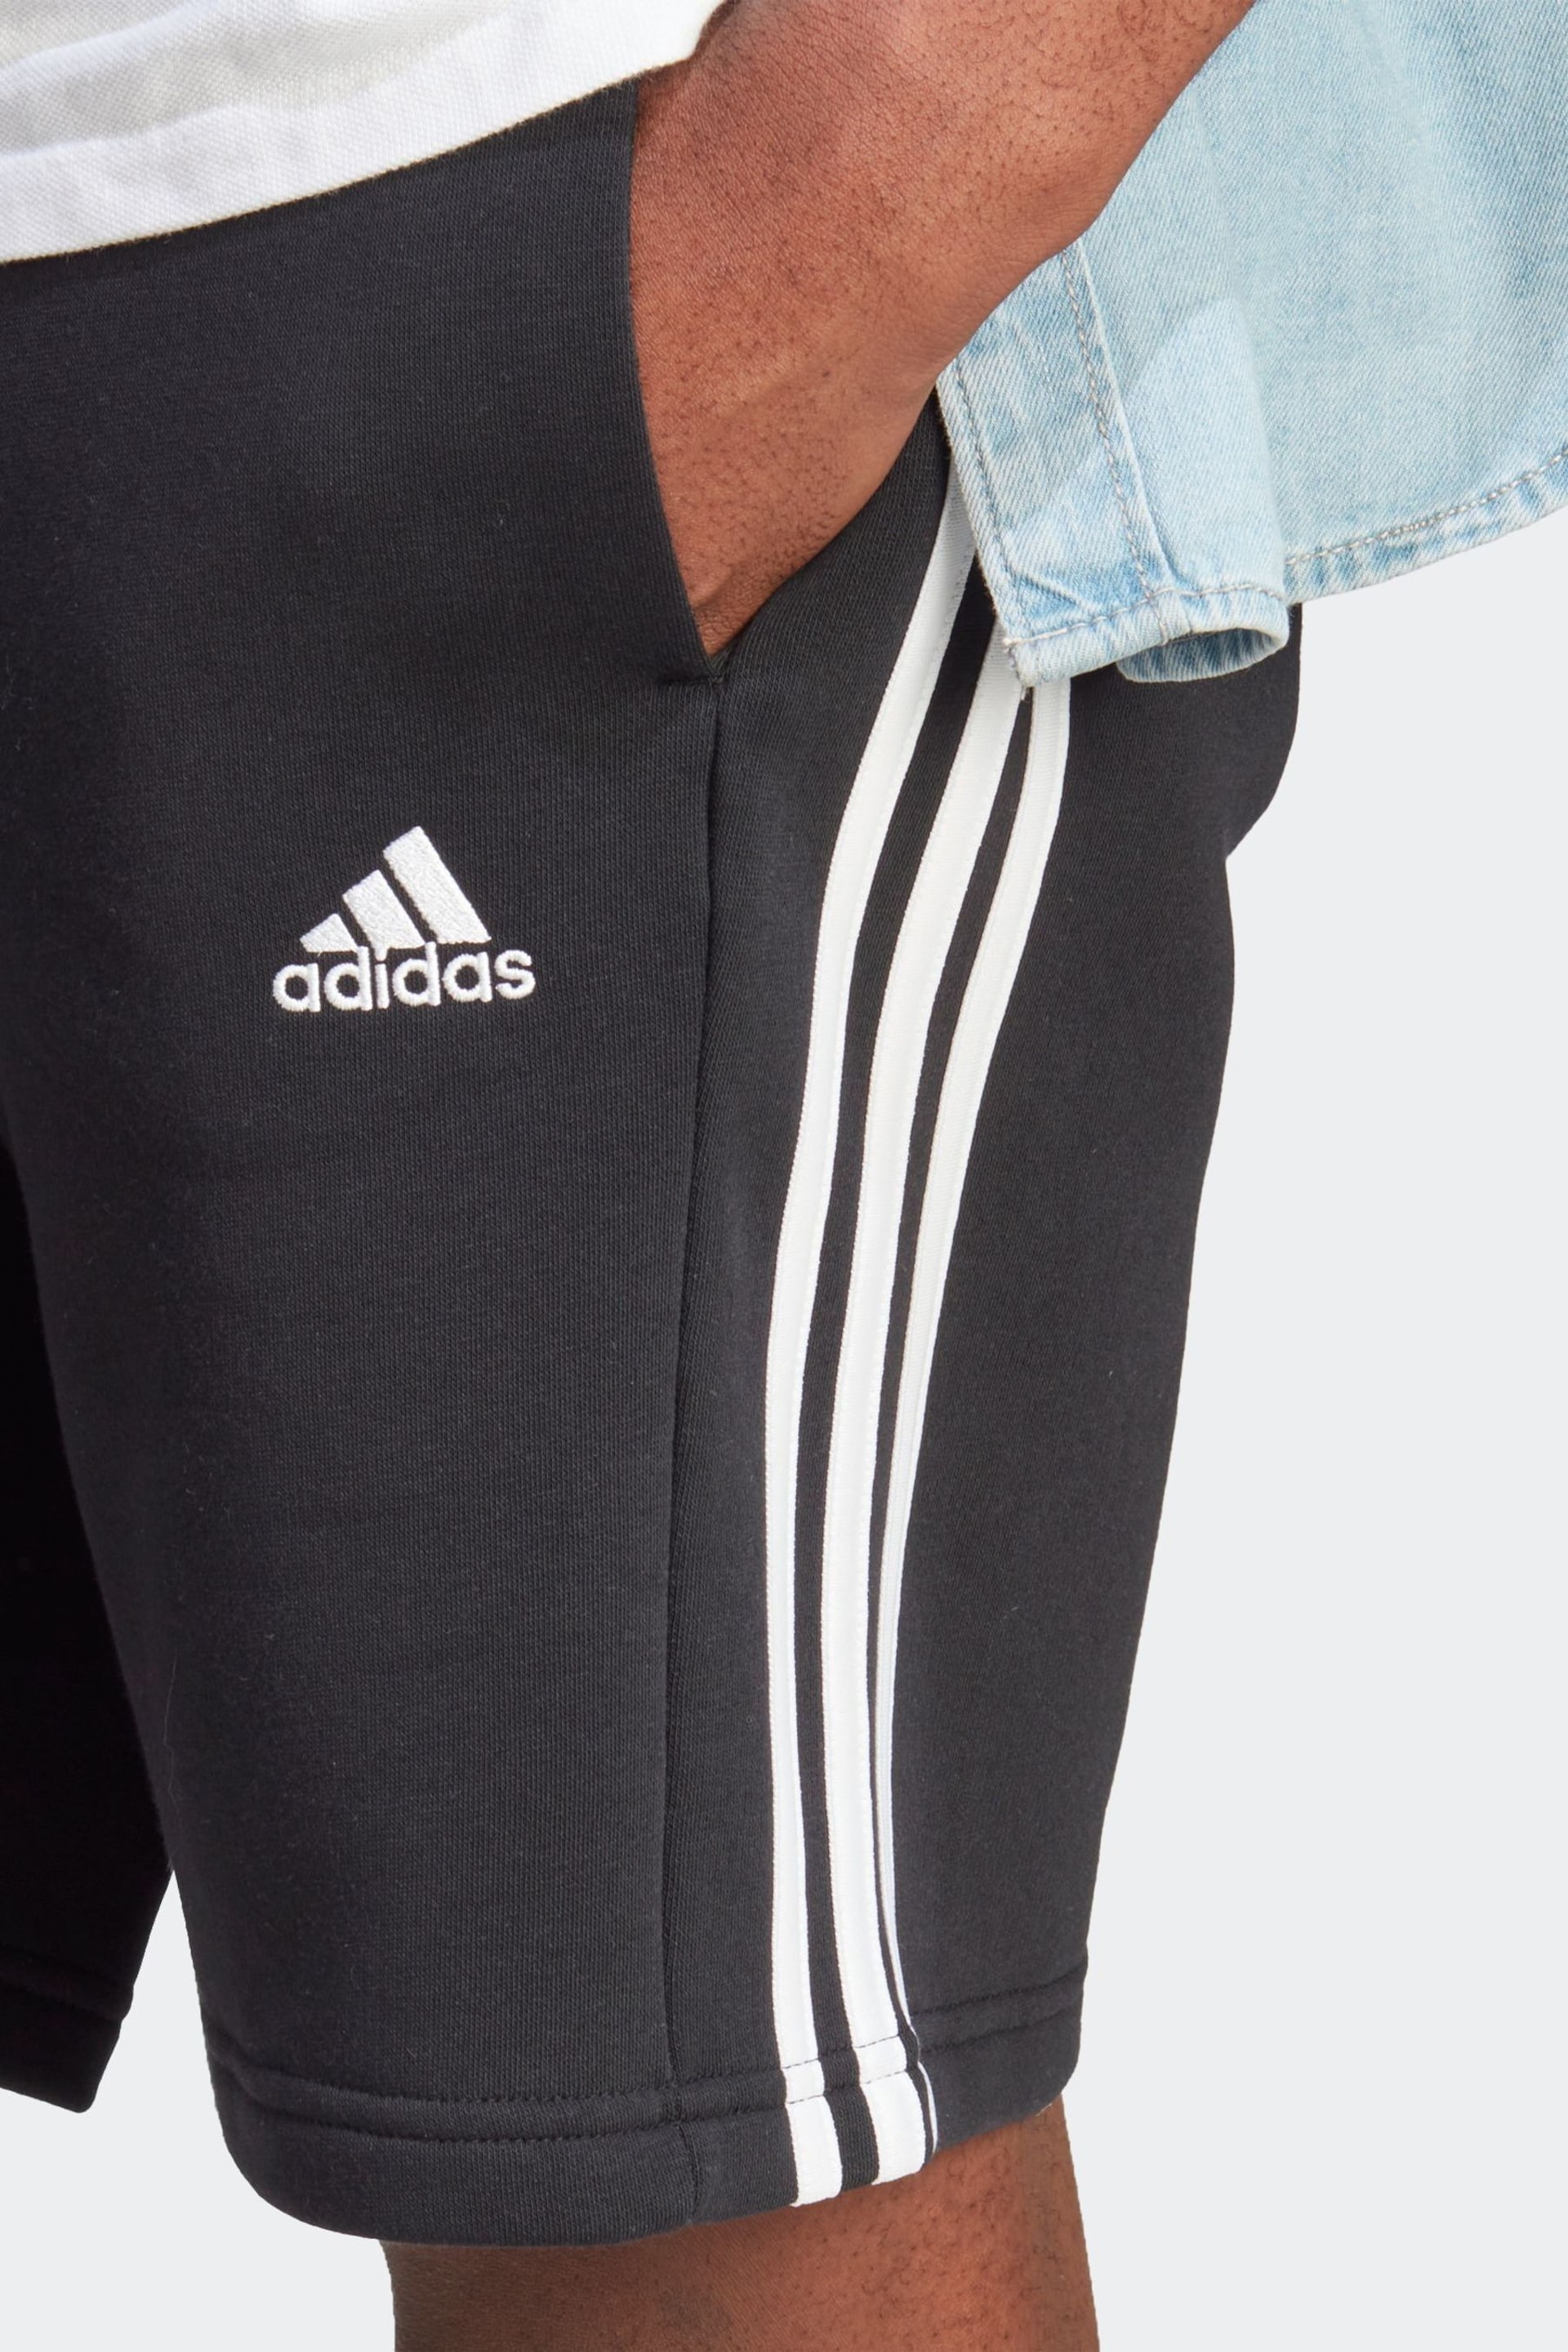 adidas Black Sportswear Essentials Fleece 3-Stripes Shorts - Image 4 of 6